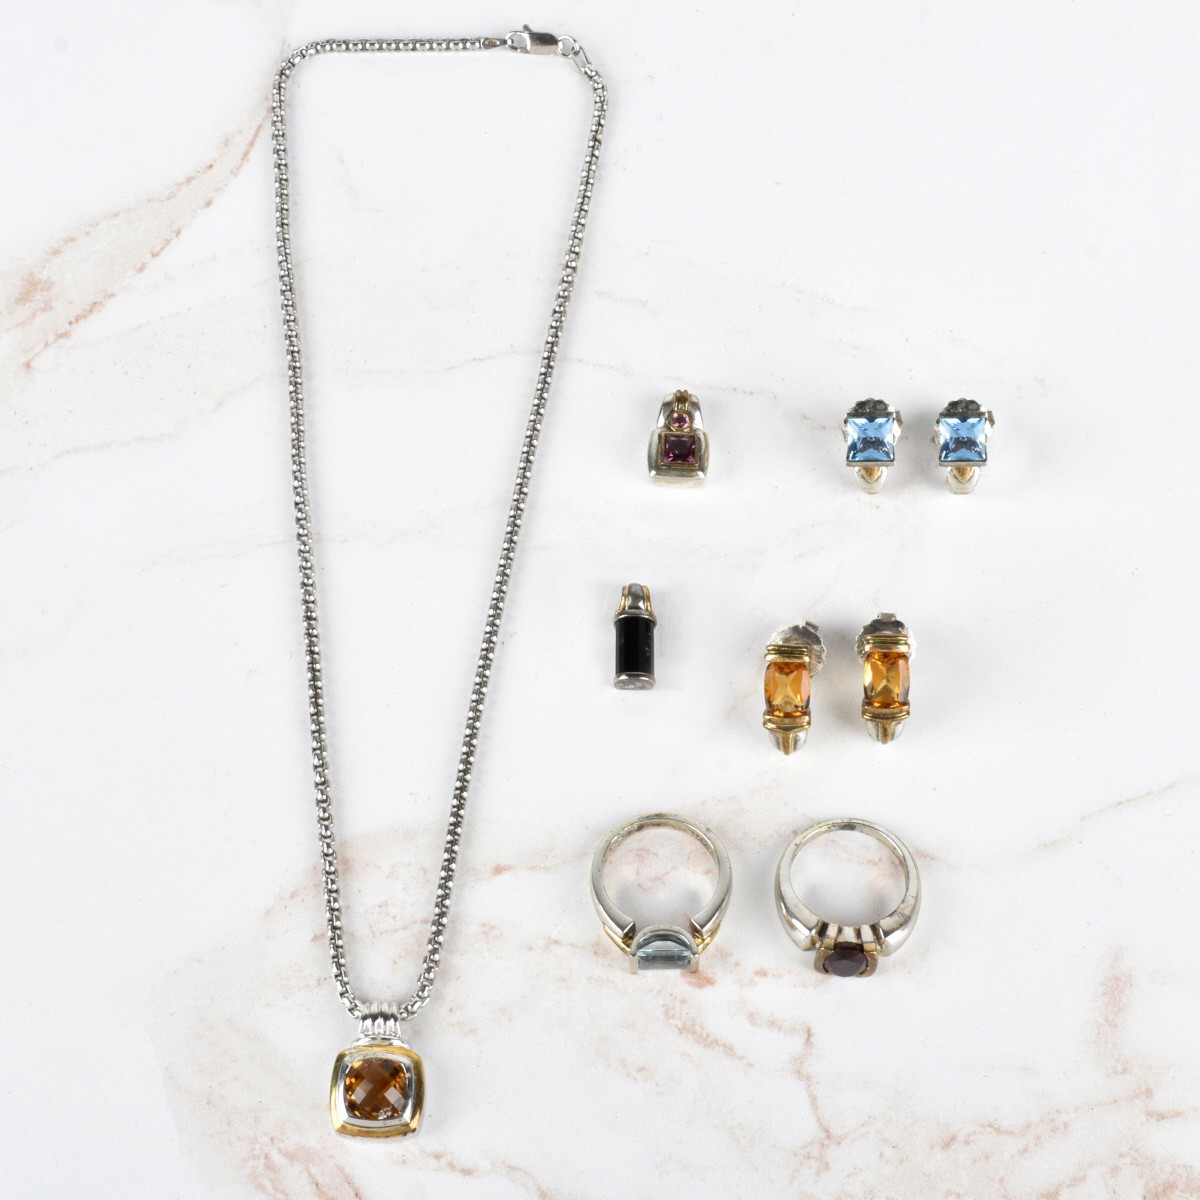 Gemstone, 18K and Silver Jewelry